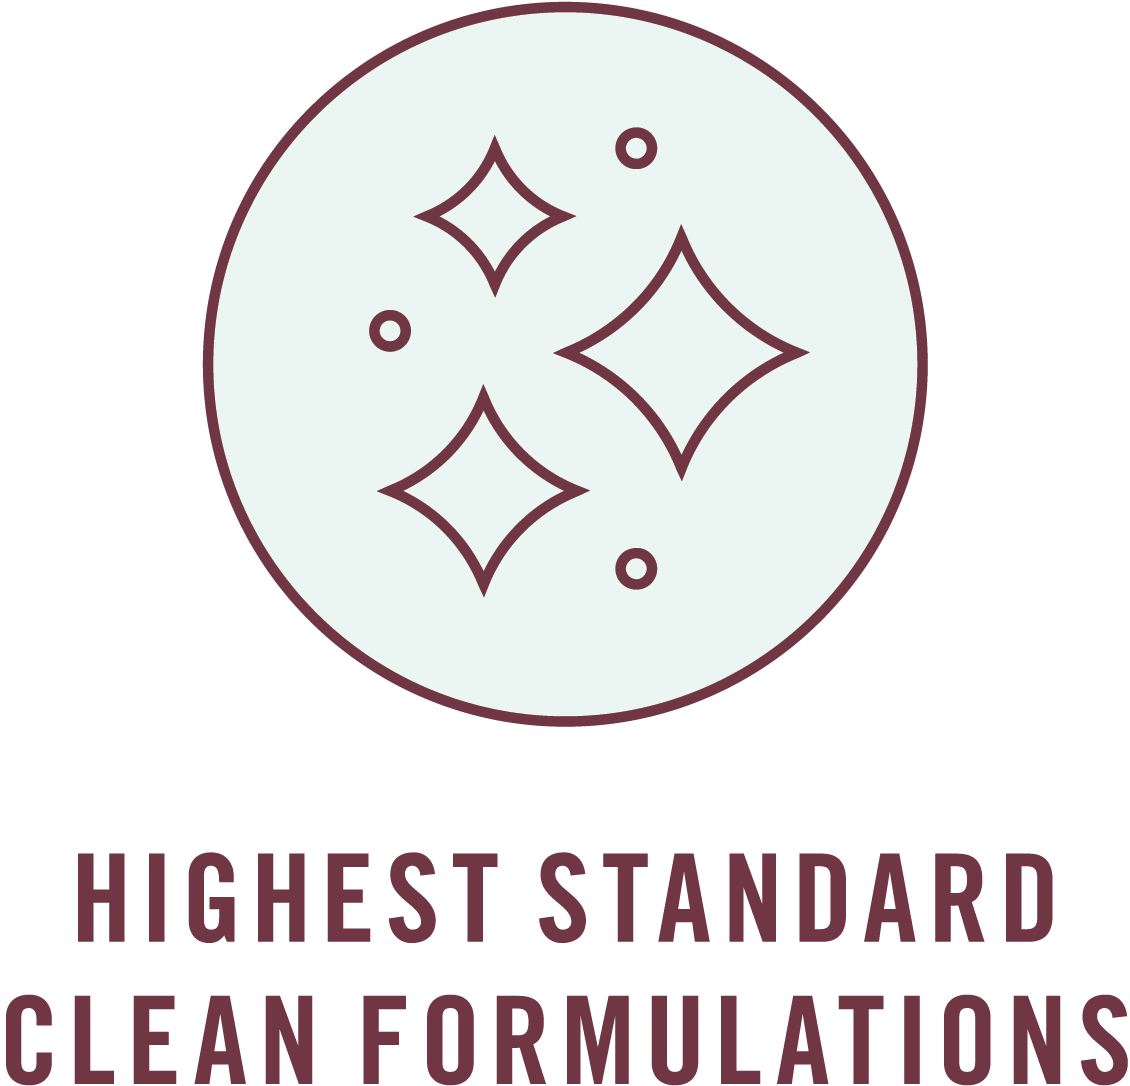 Highest standard clean formulations